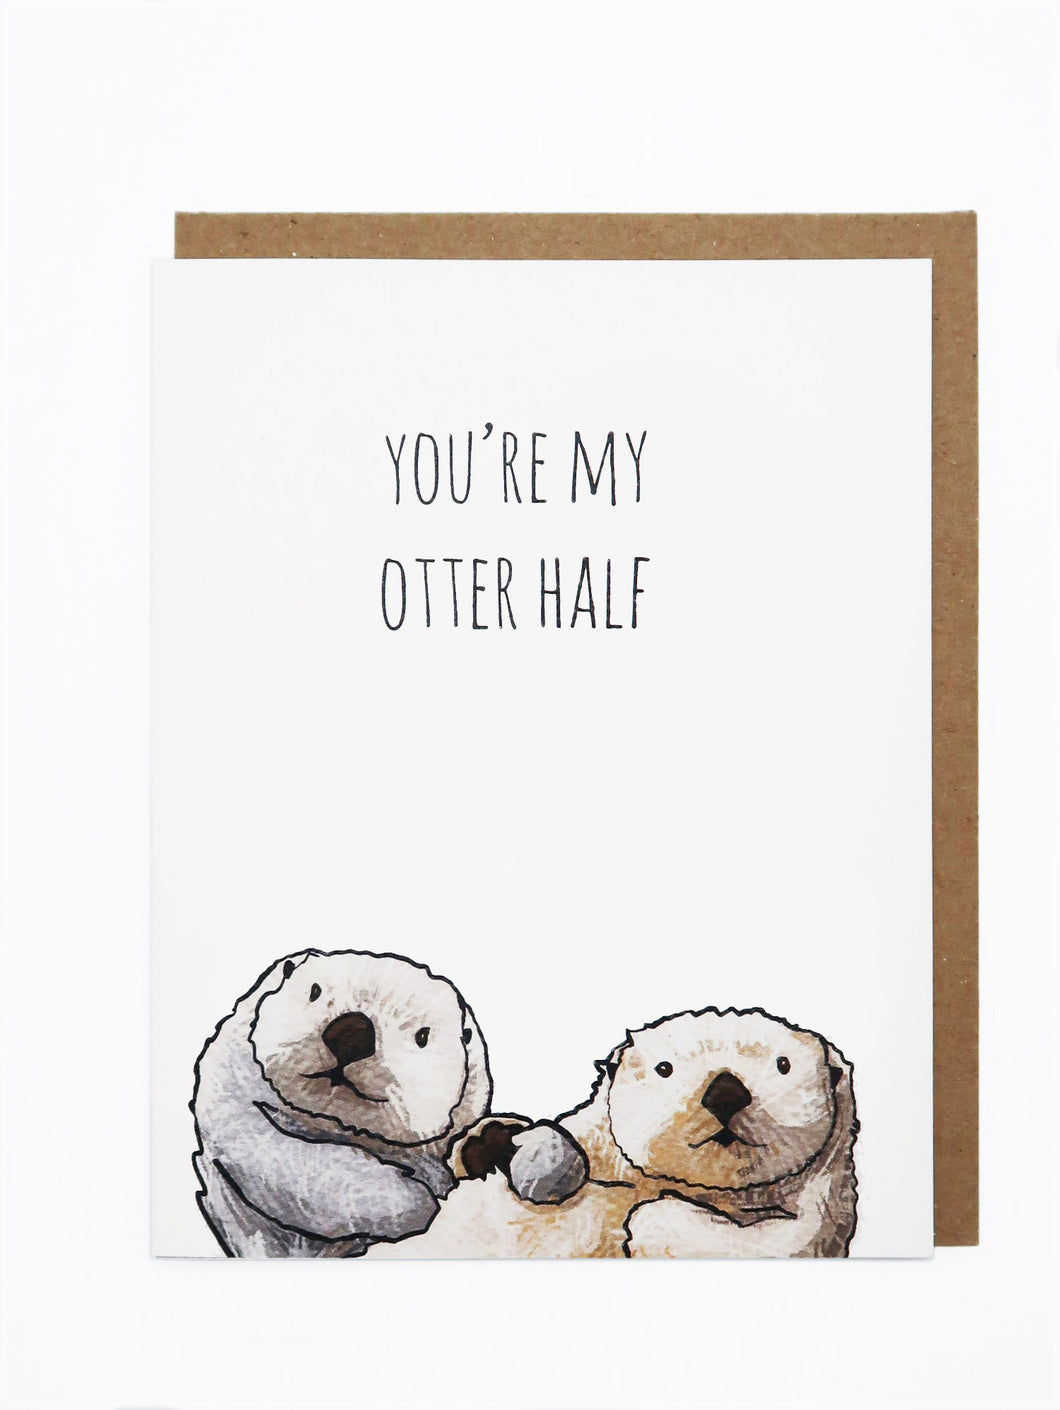 Otter Half